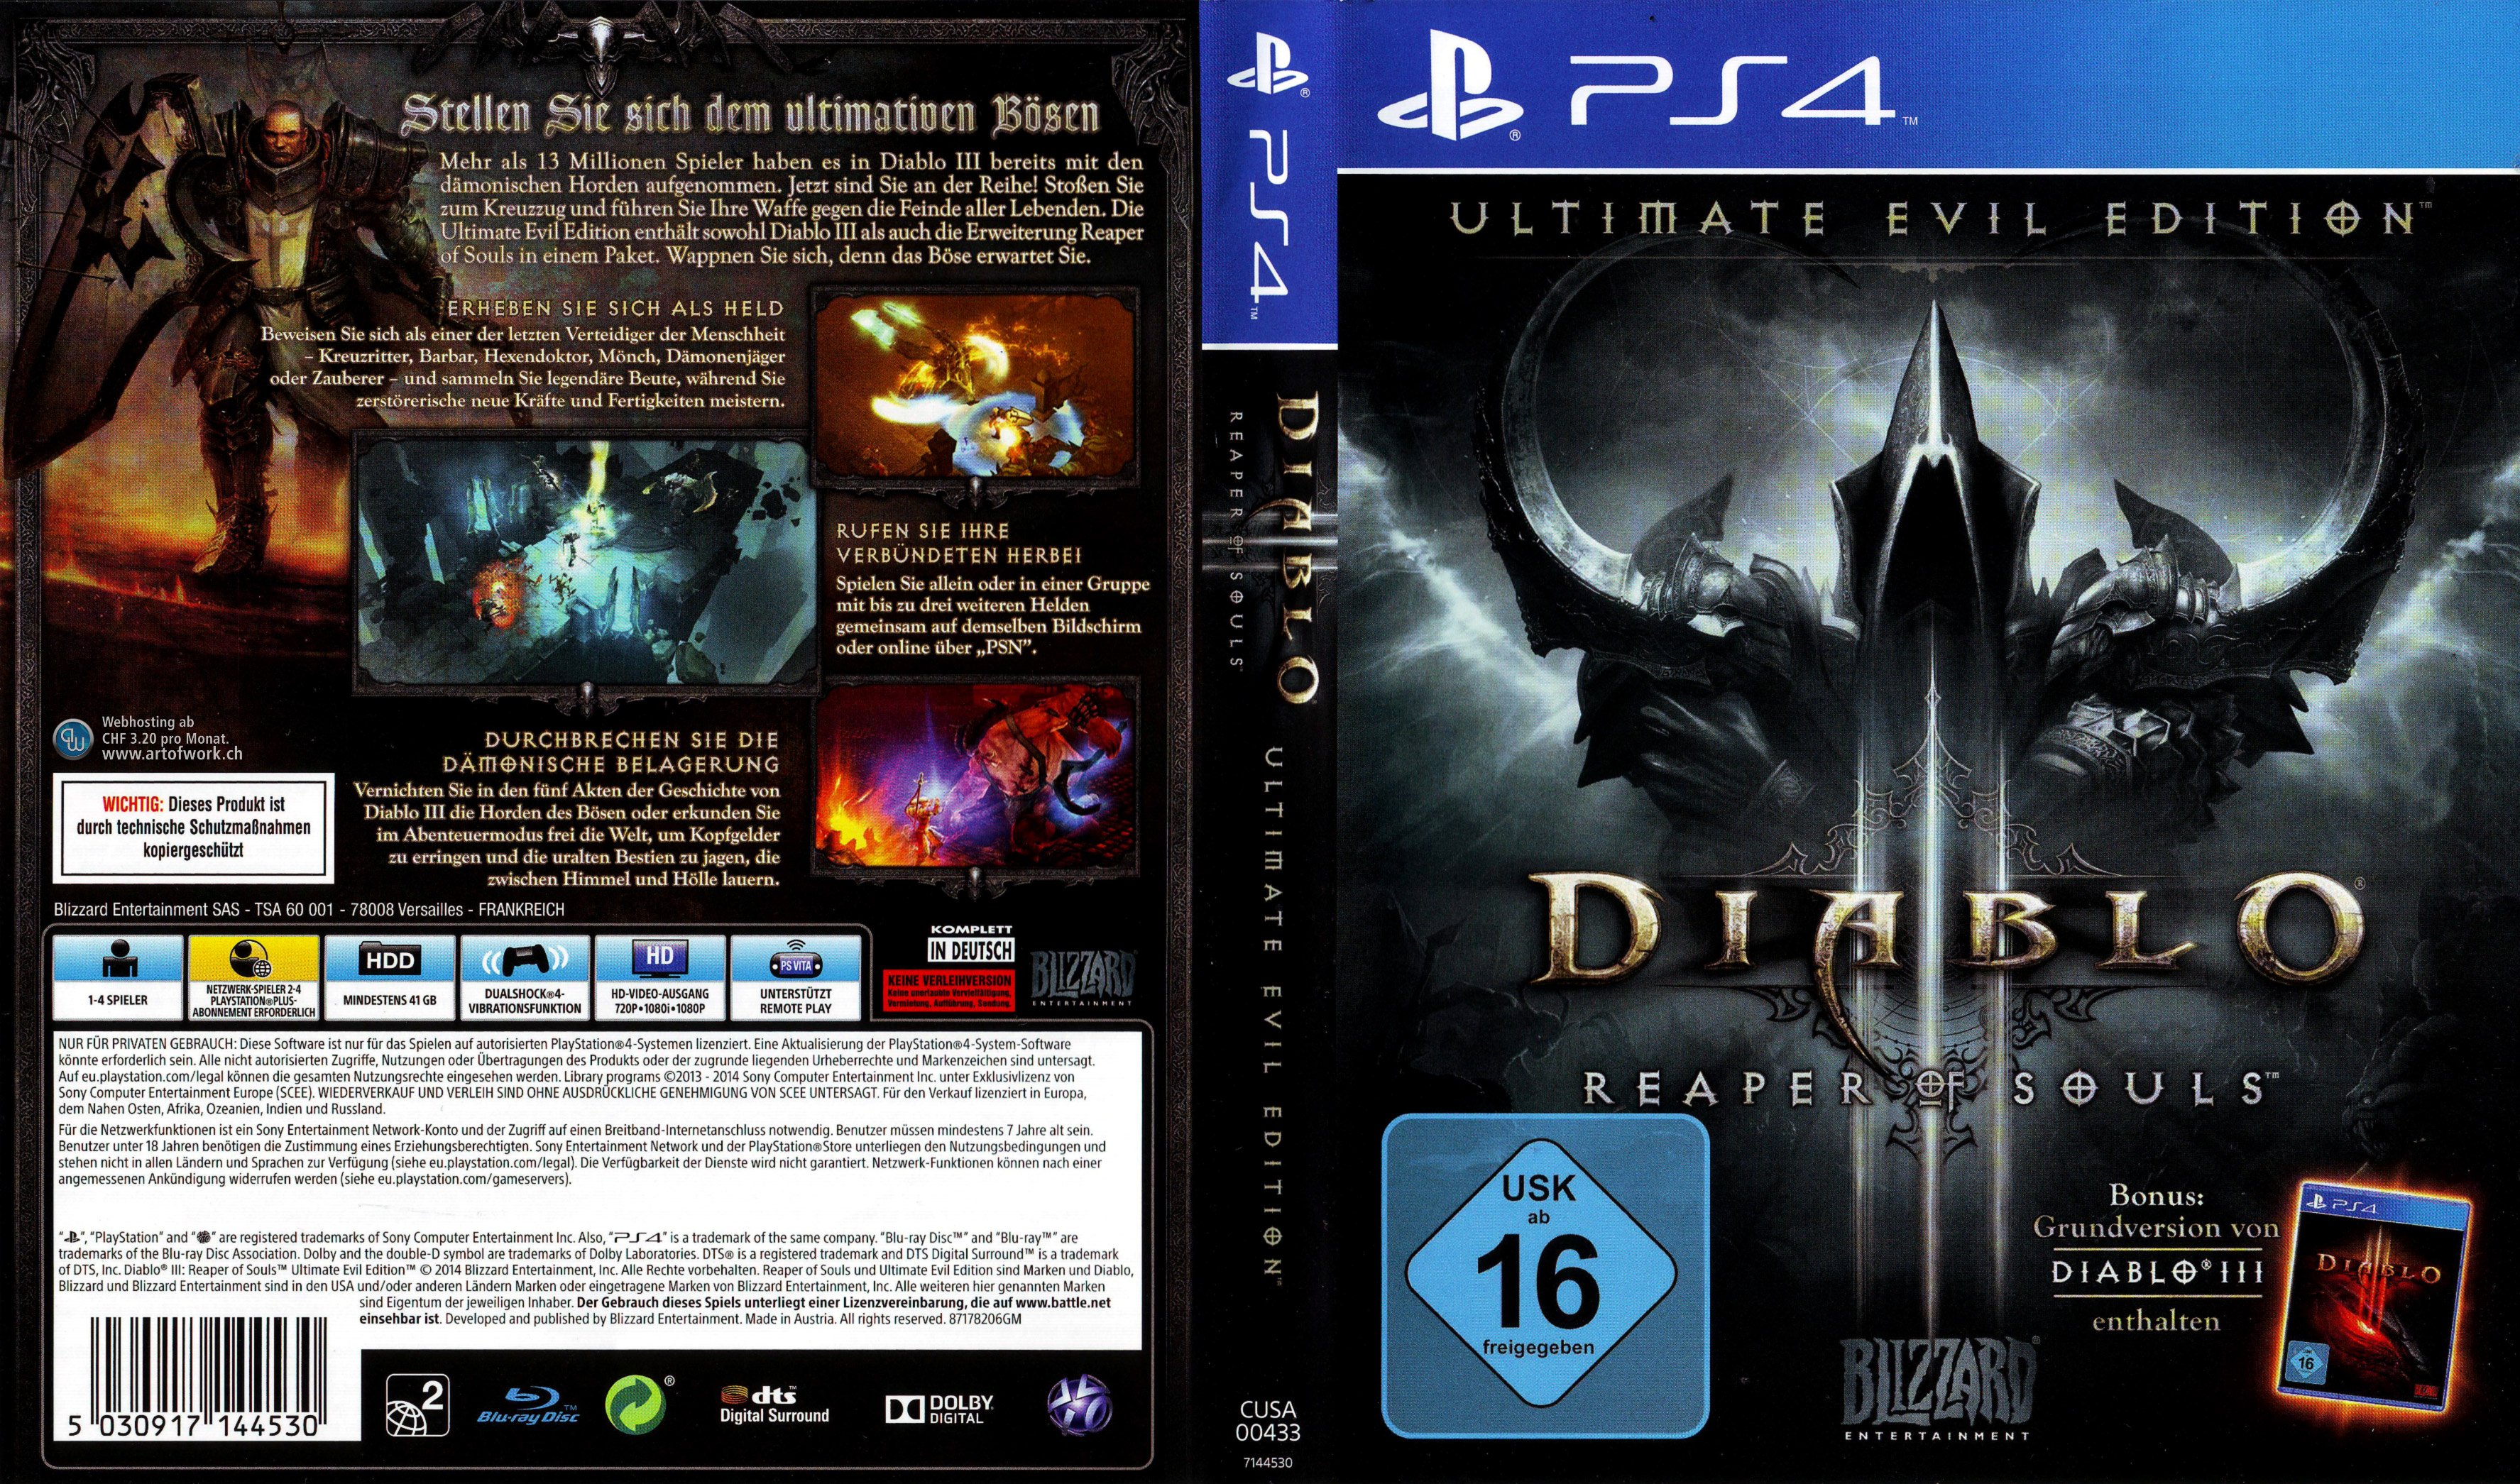 Ps4 ultimate edition. Diablo 3 PS 4 диск. Издание Ultimate Evil Edition Diablo 4. Diablo 3 диск. Обложка Diablo 3 ps4.